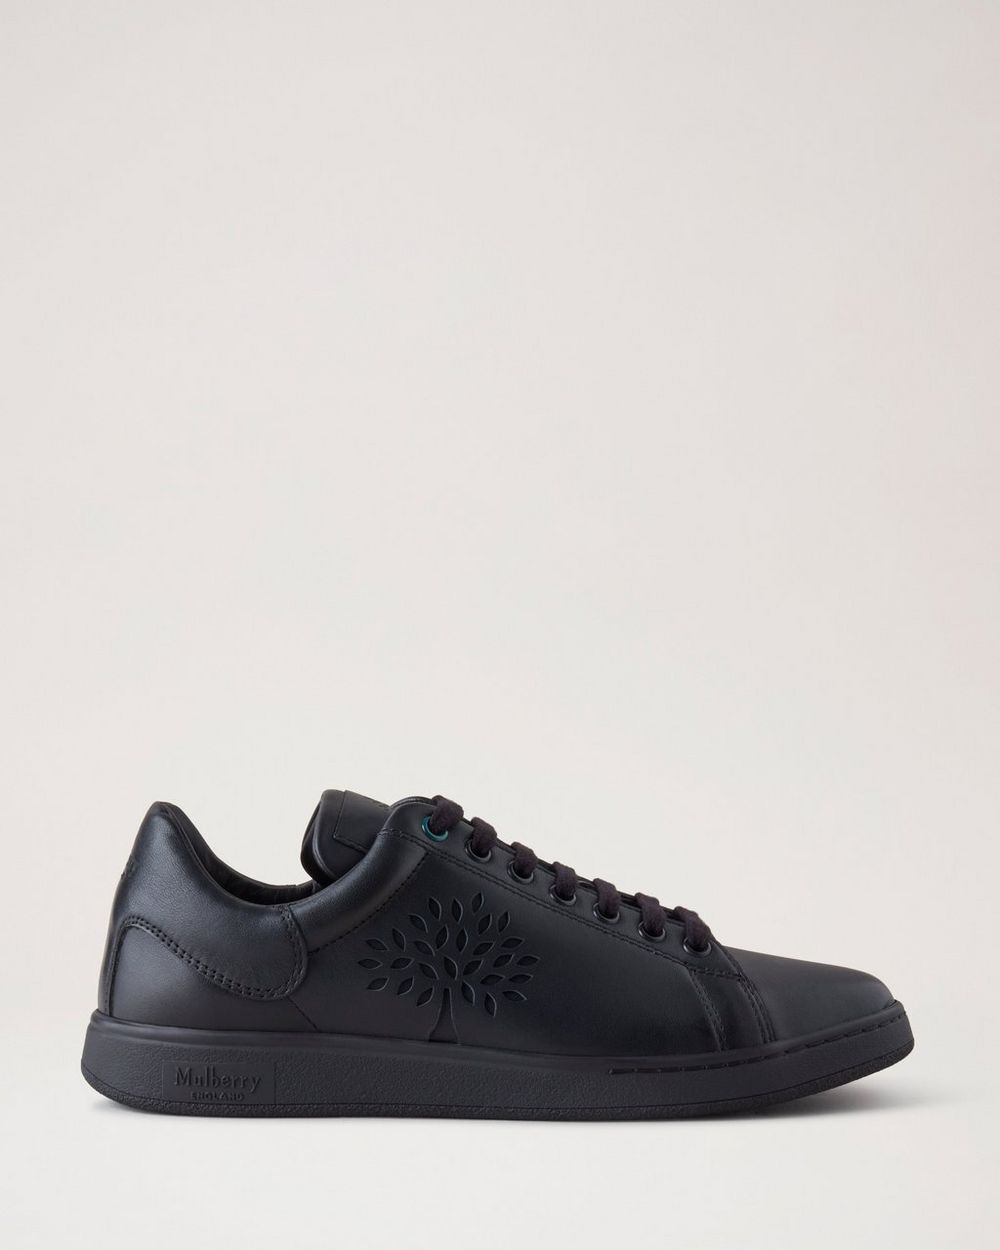 LOUIS VUITTON women's black leather sneakers | Size 38 / US 7.5 (25 cm /  9.8 in)